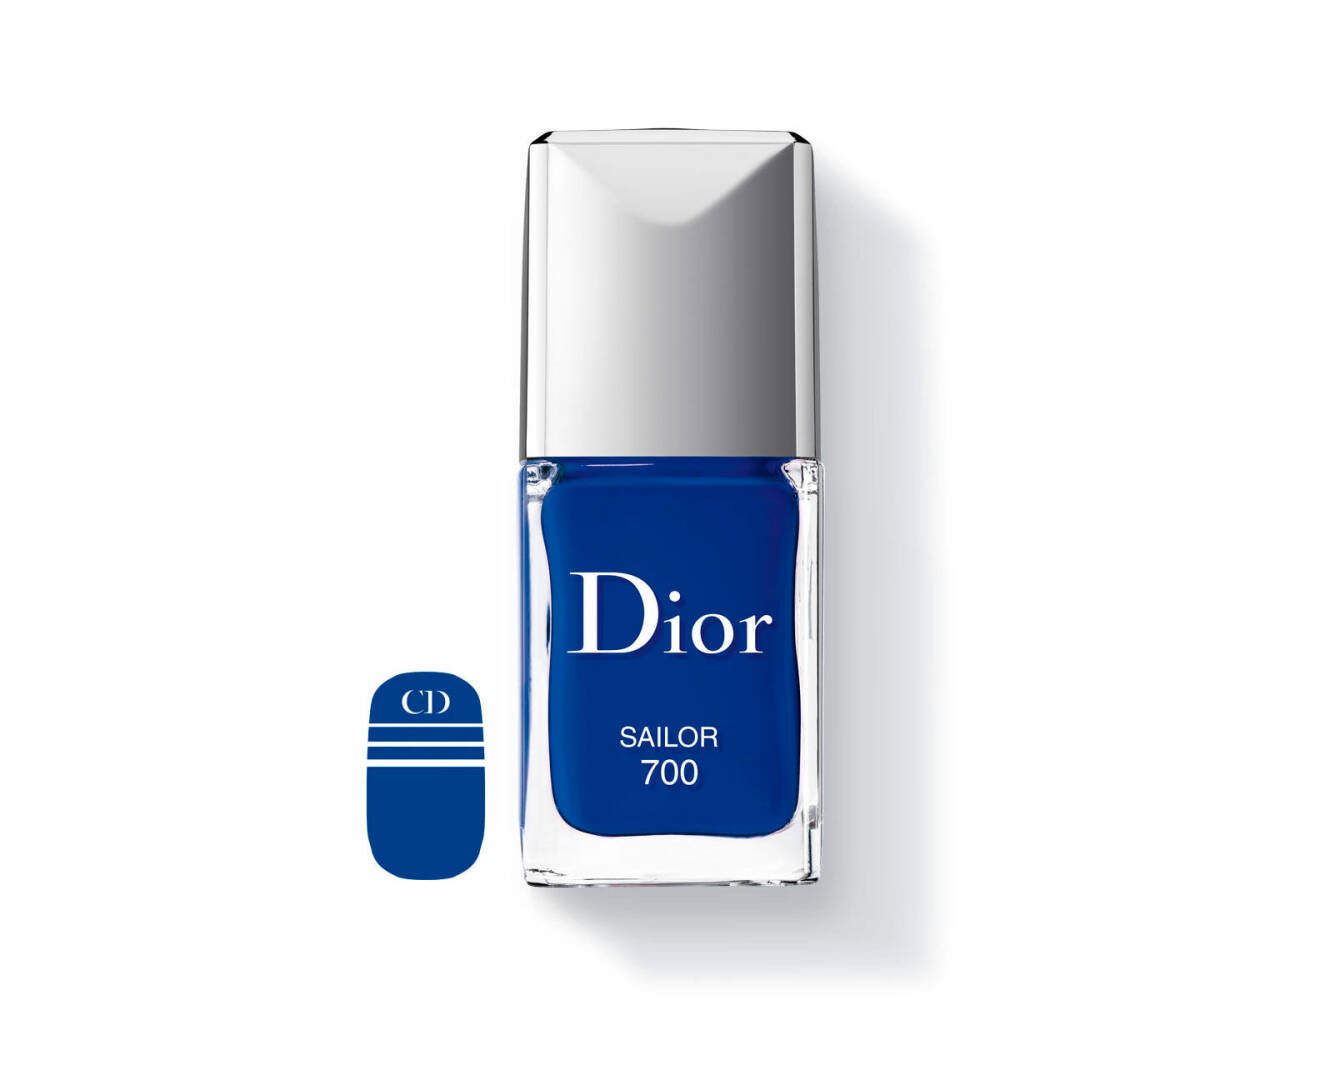 Diors nagellack Manucure Transat, 315 kr.